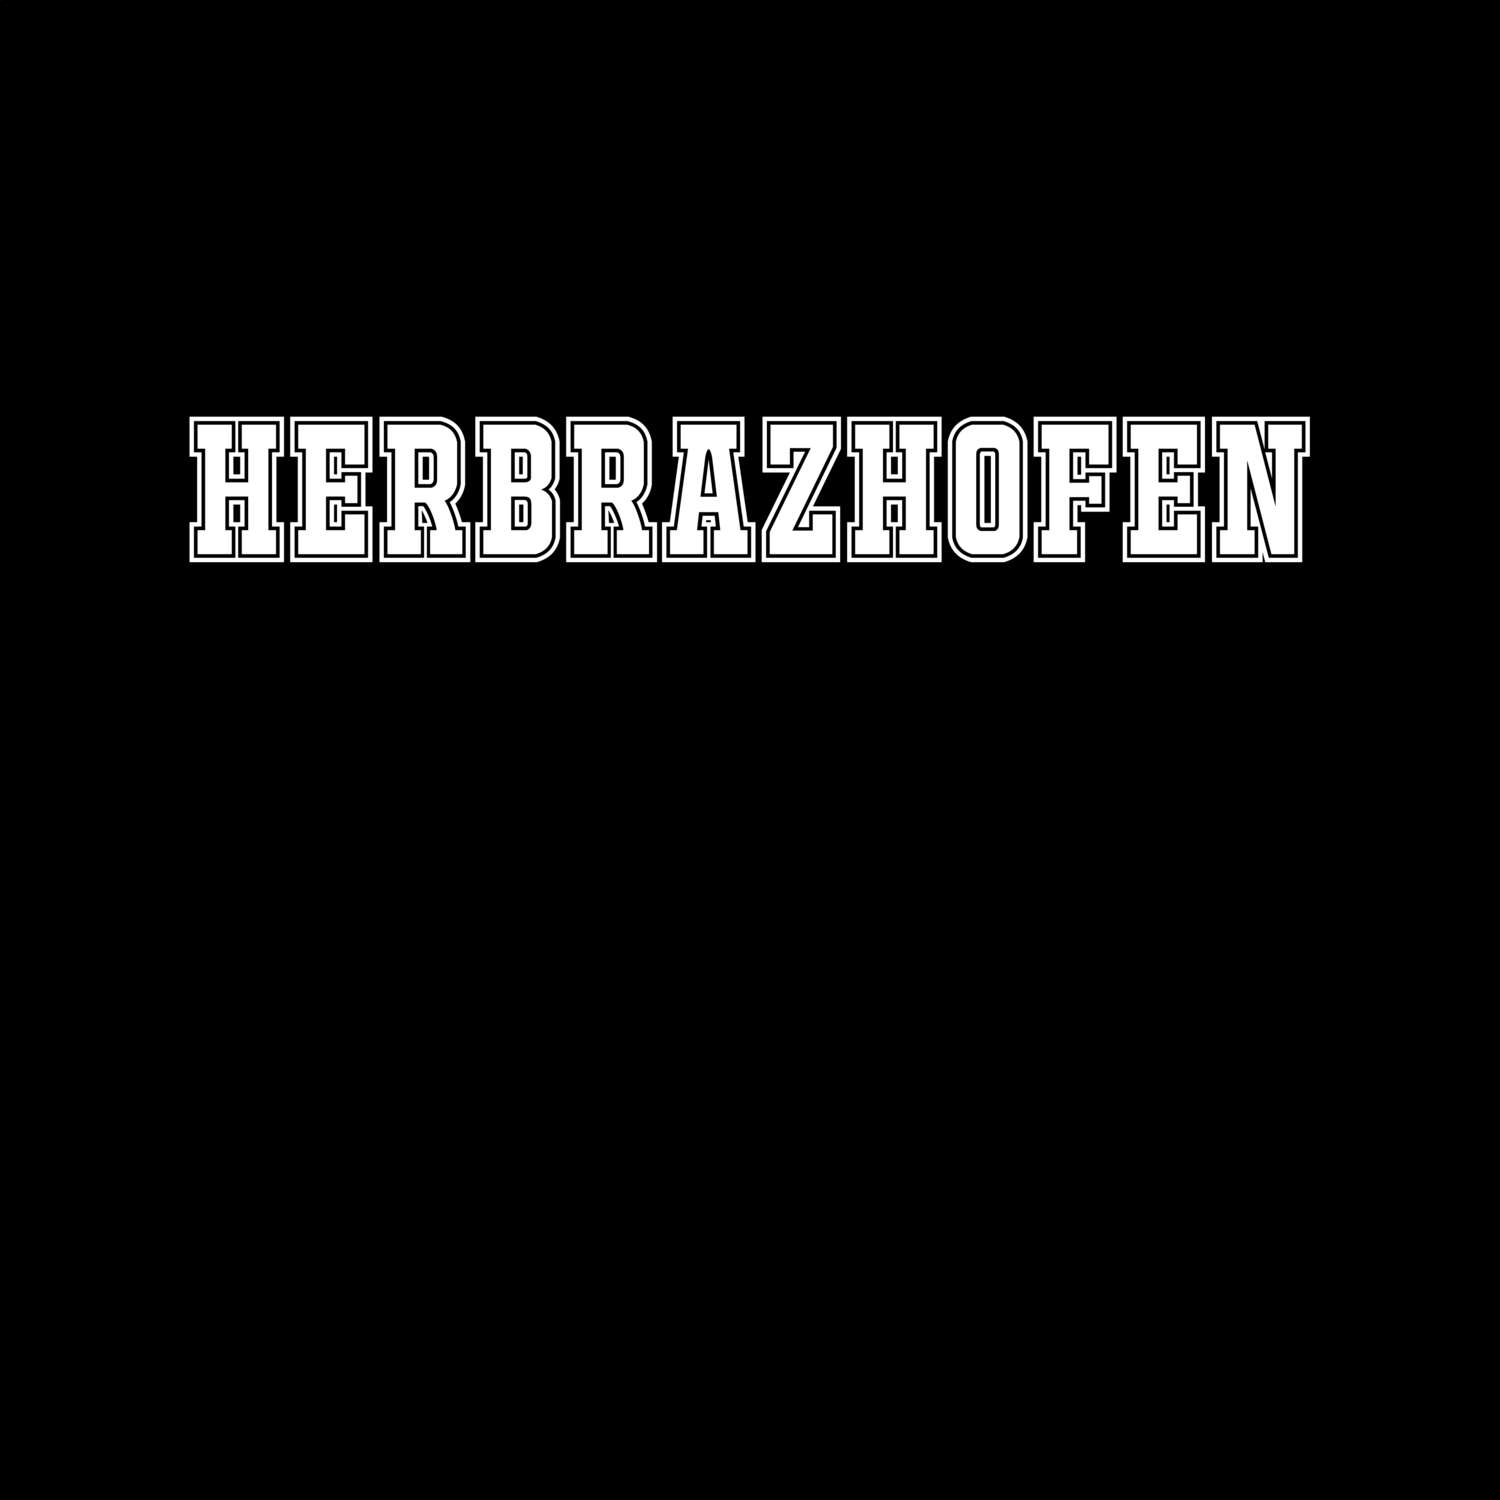 Herbrazhofen T-Shirt »Classic«